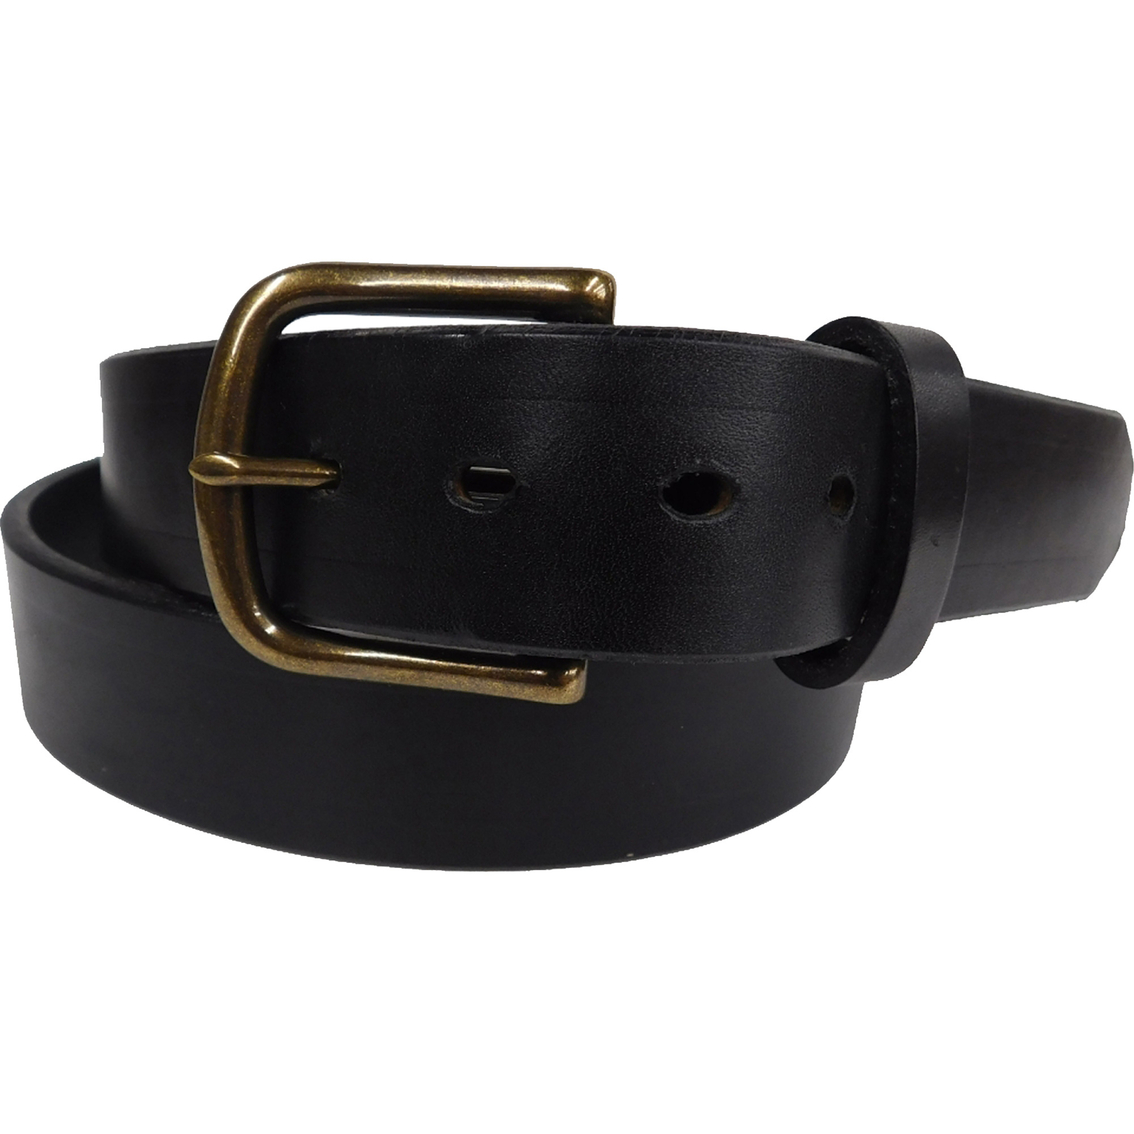 Surtan Mfg. Brass Buckle Leather Belt | Belts | Clothing & Accessories ...